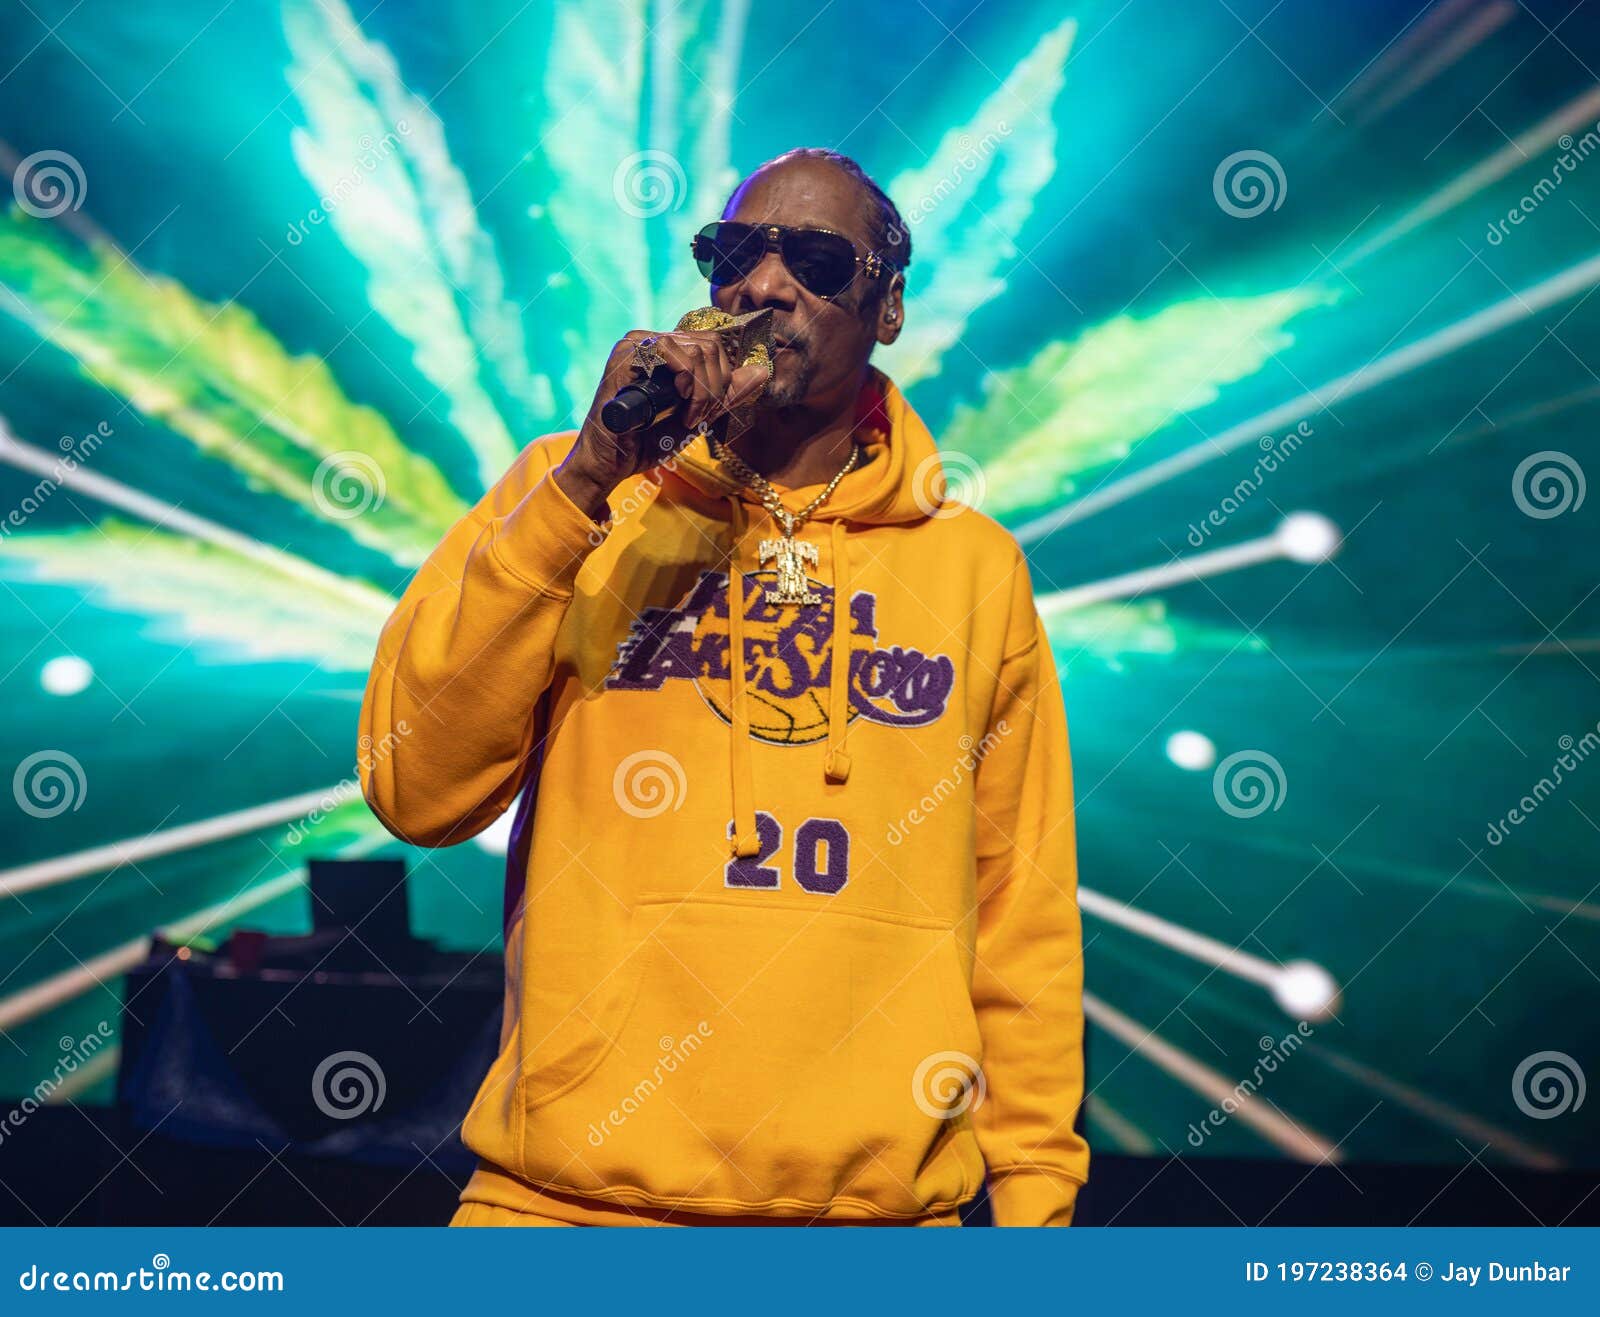 Foto firmada de Snoop Dogg 